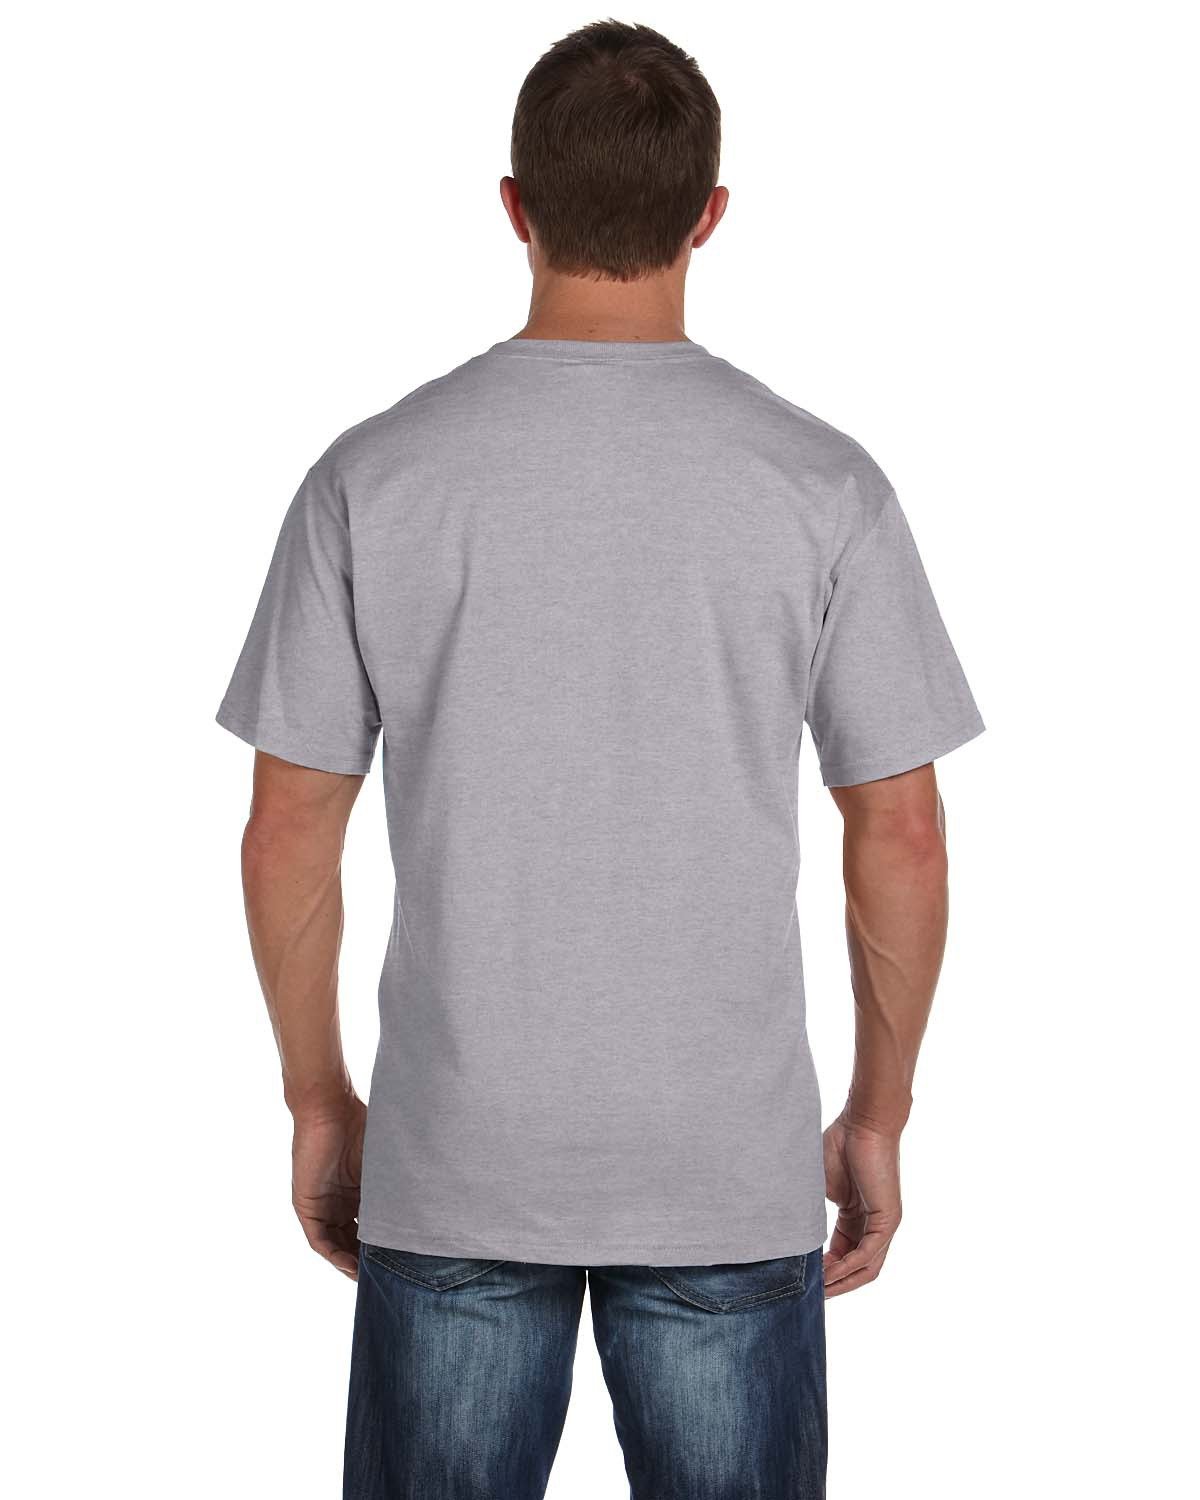 Fruit of the Loom Men's 100% Cotton Pocket T-Shirt S-3XL Tee 3930P | eBay